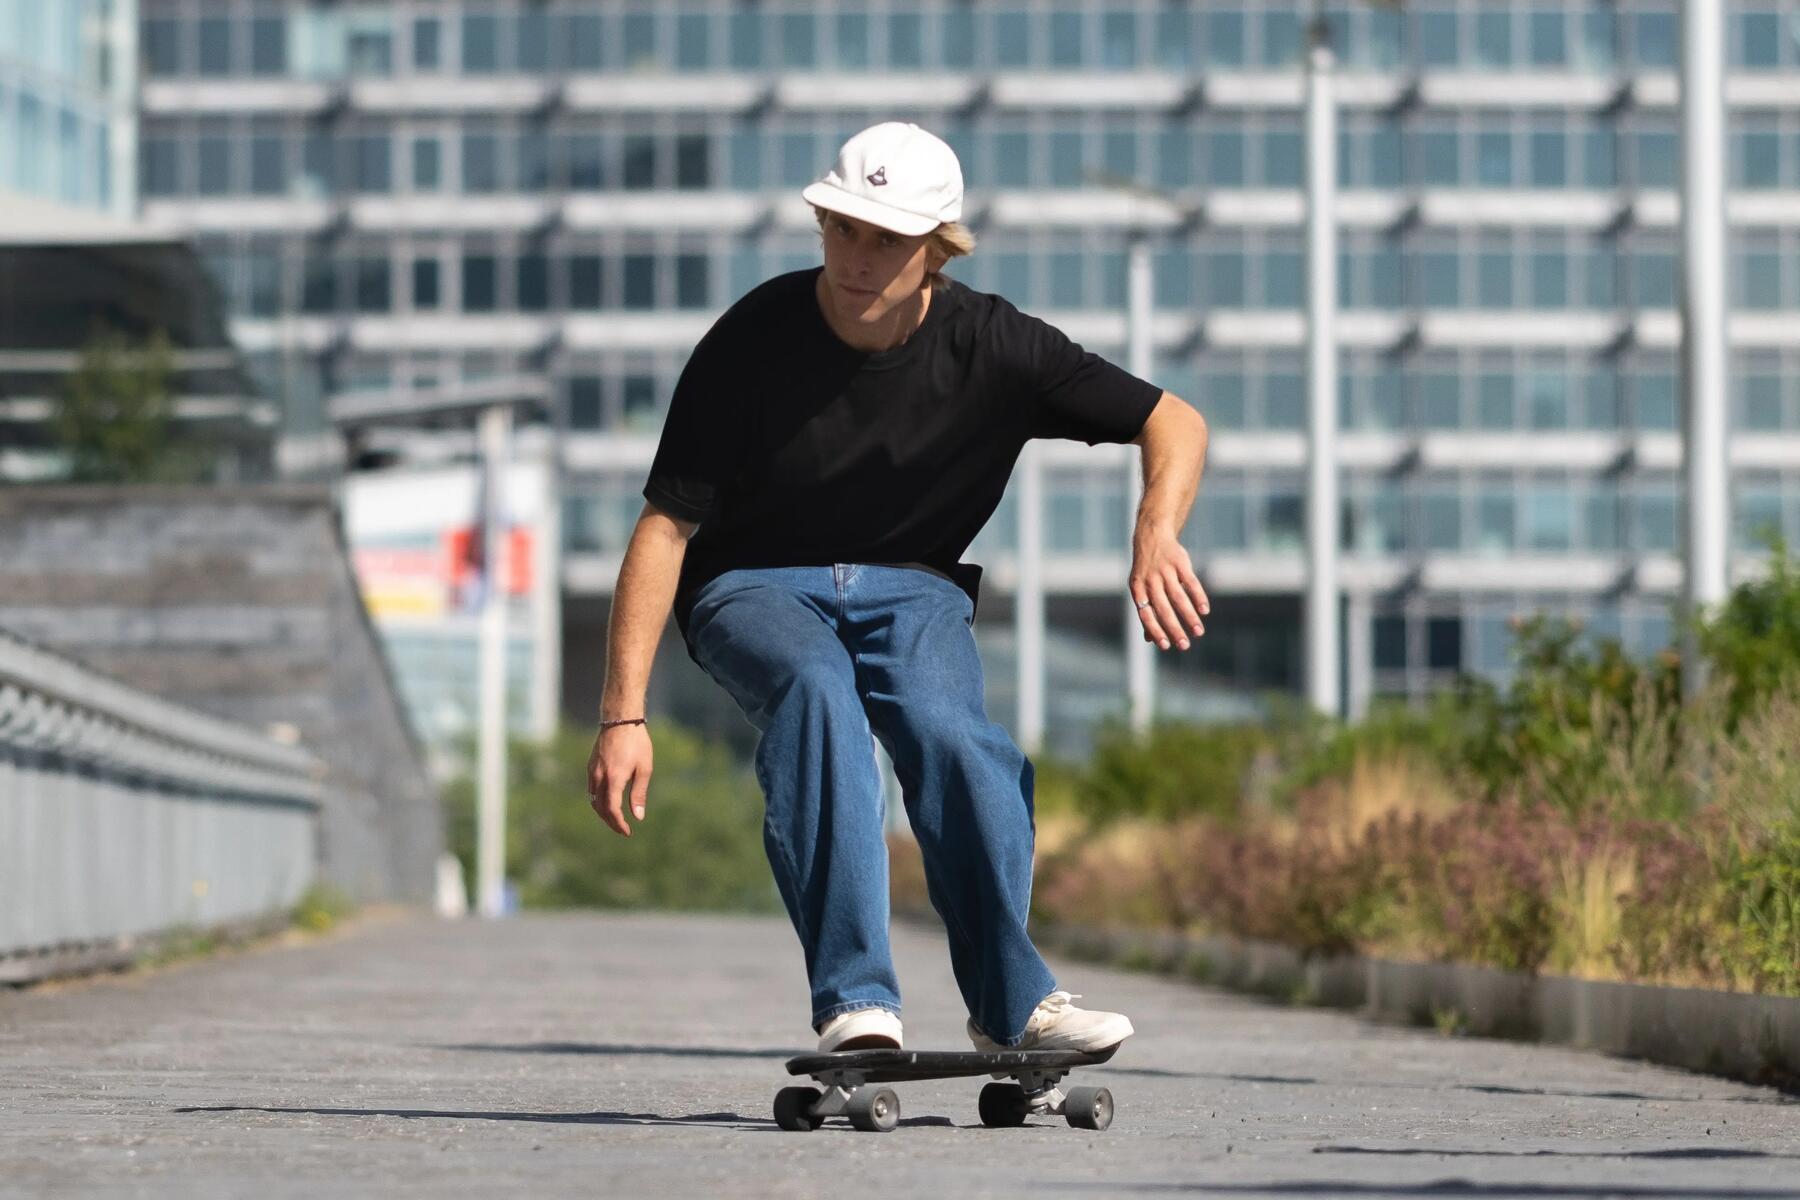 tabla short board skate